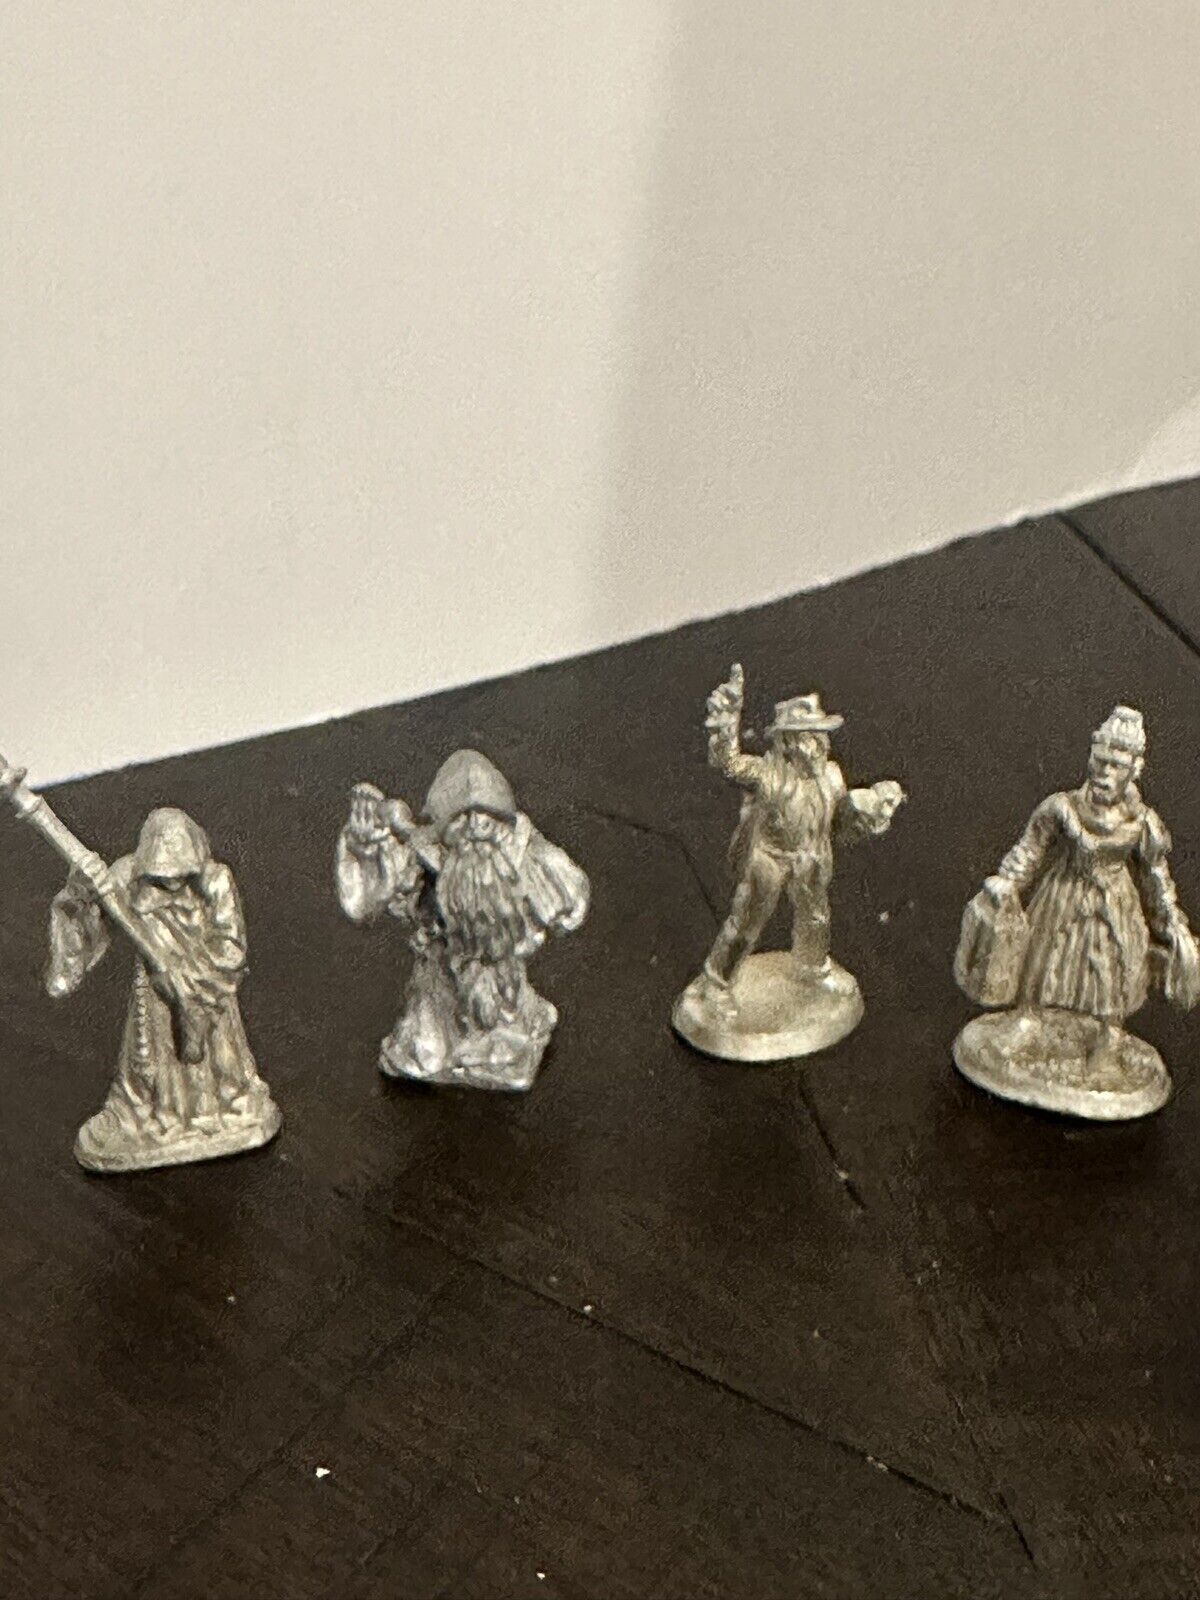 Lot of 4 Vintage Medieval Fantasy Pewter Miniature Figures